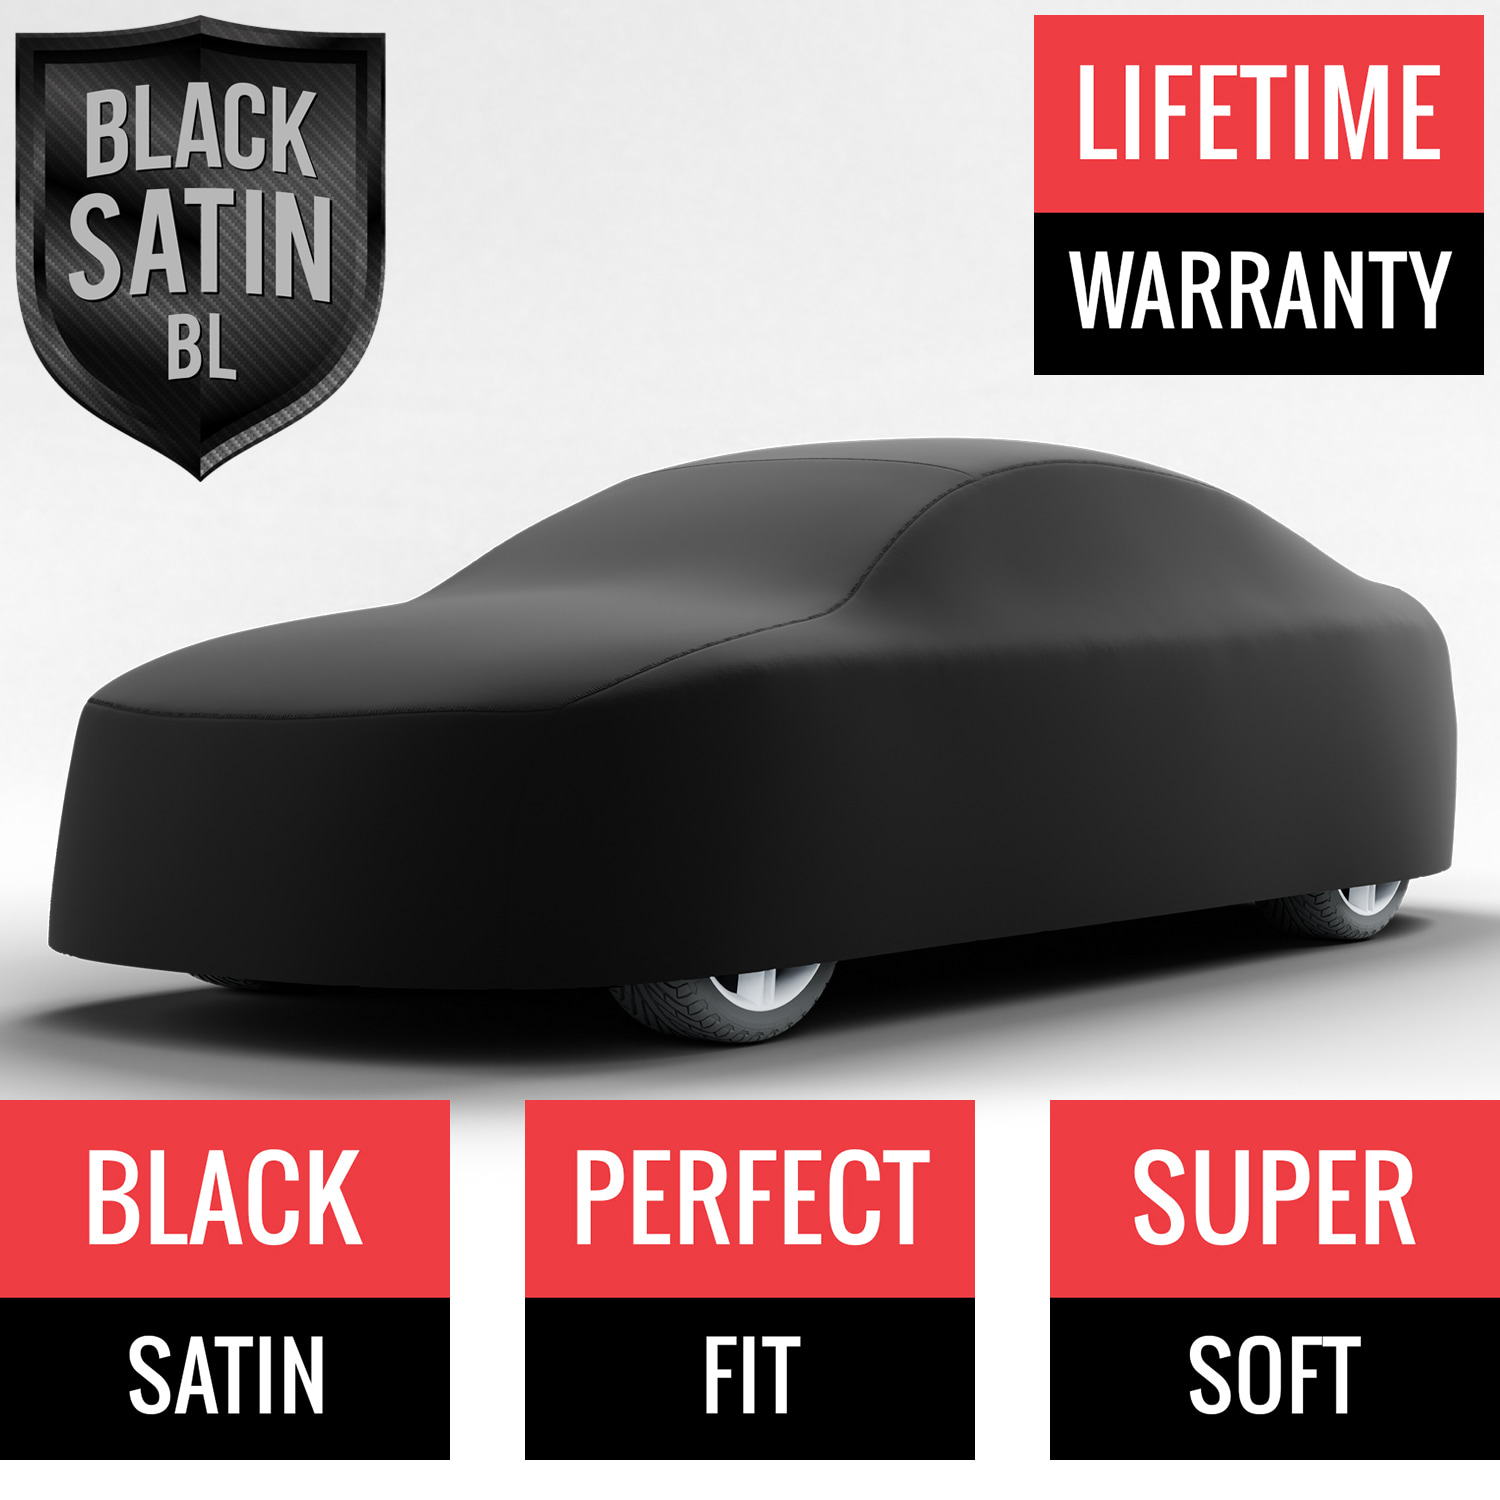 Black Satin BL - Black Car Cover for BMW 535i 2013 Sedan 4-Door